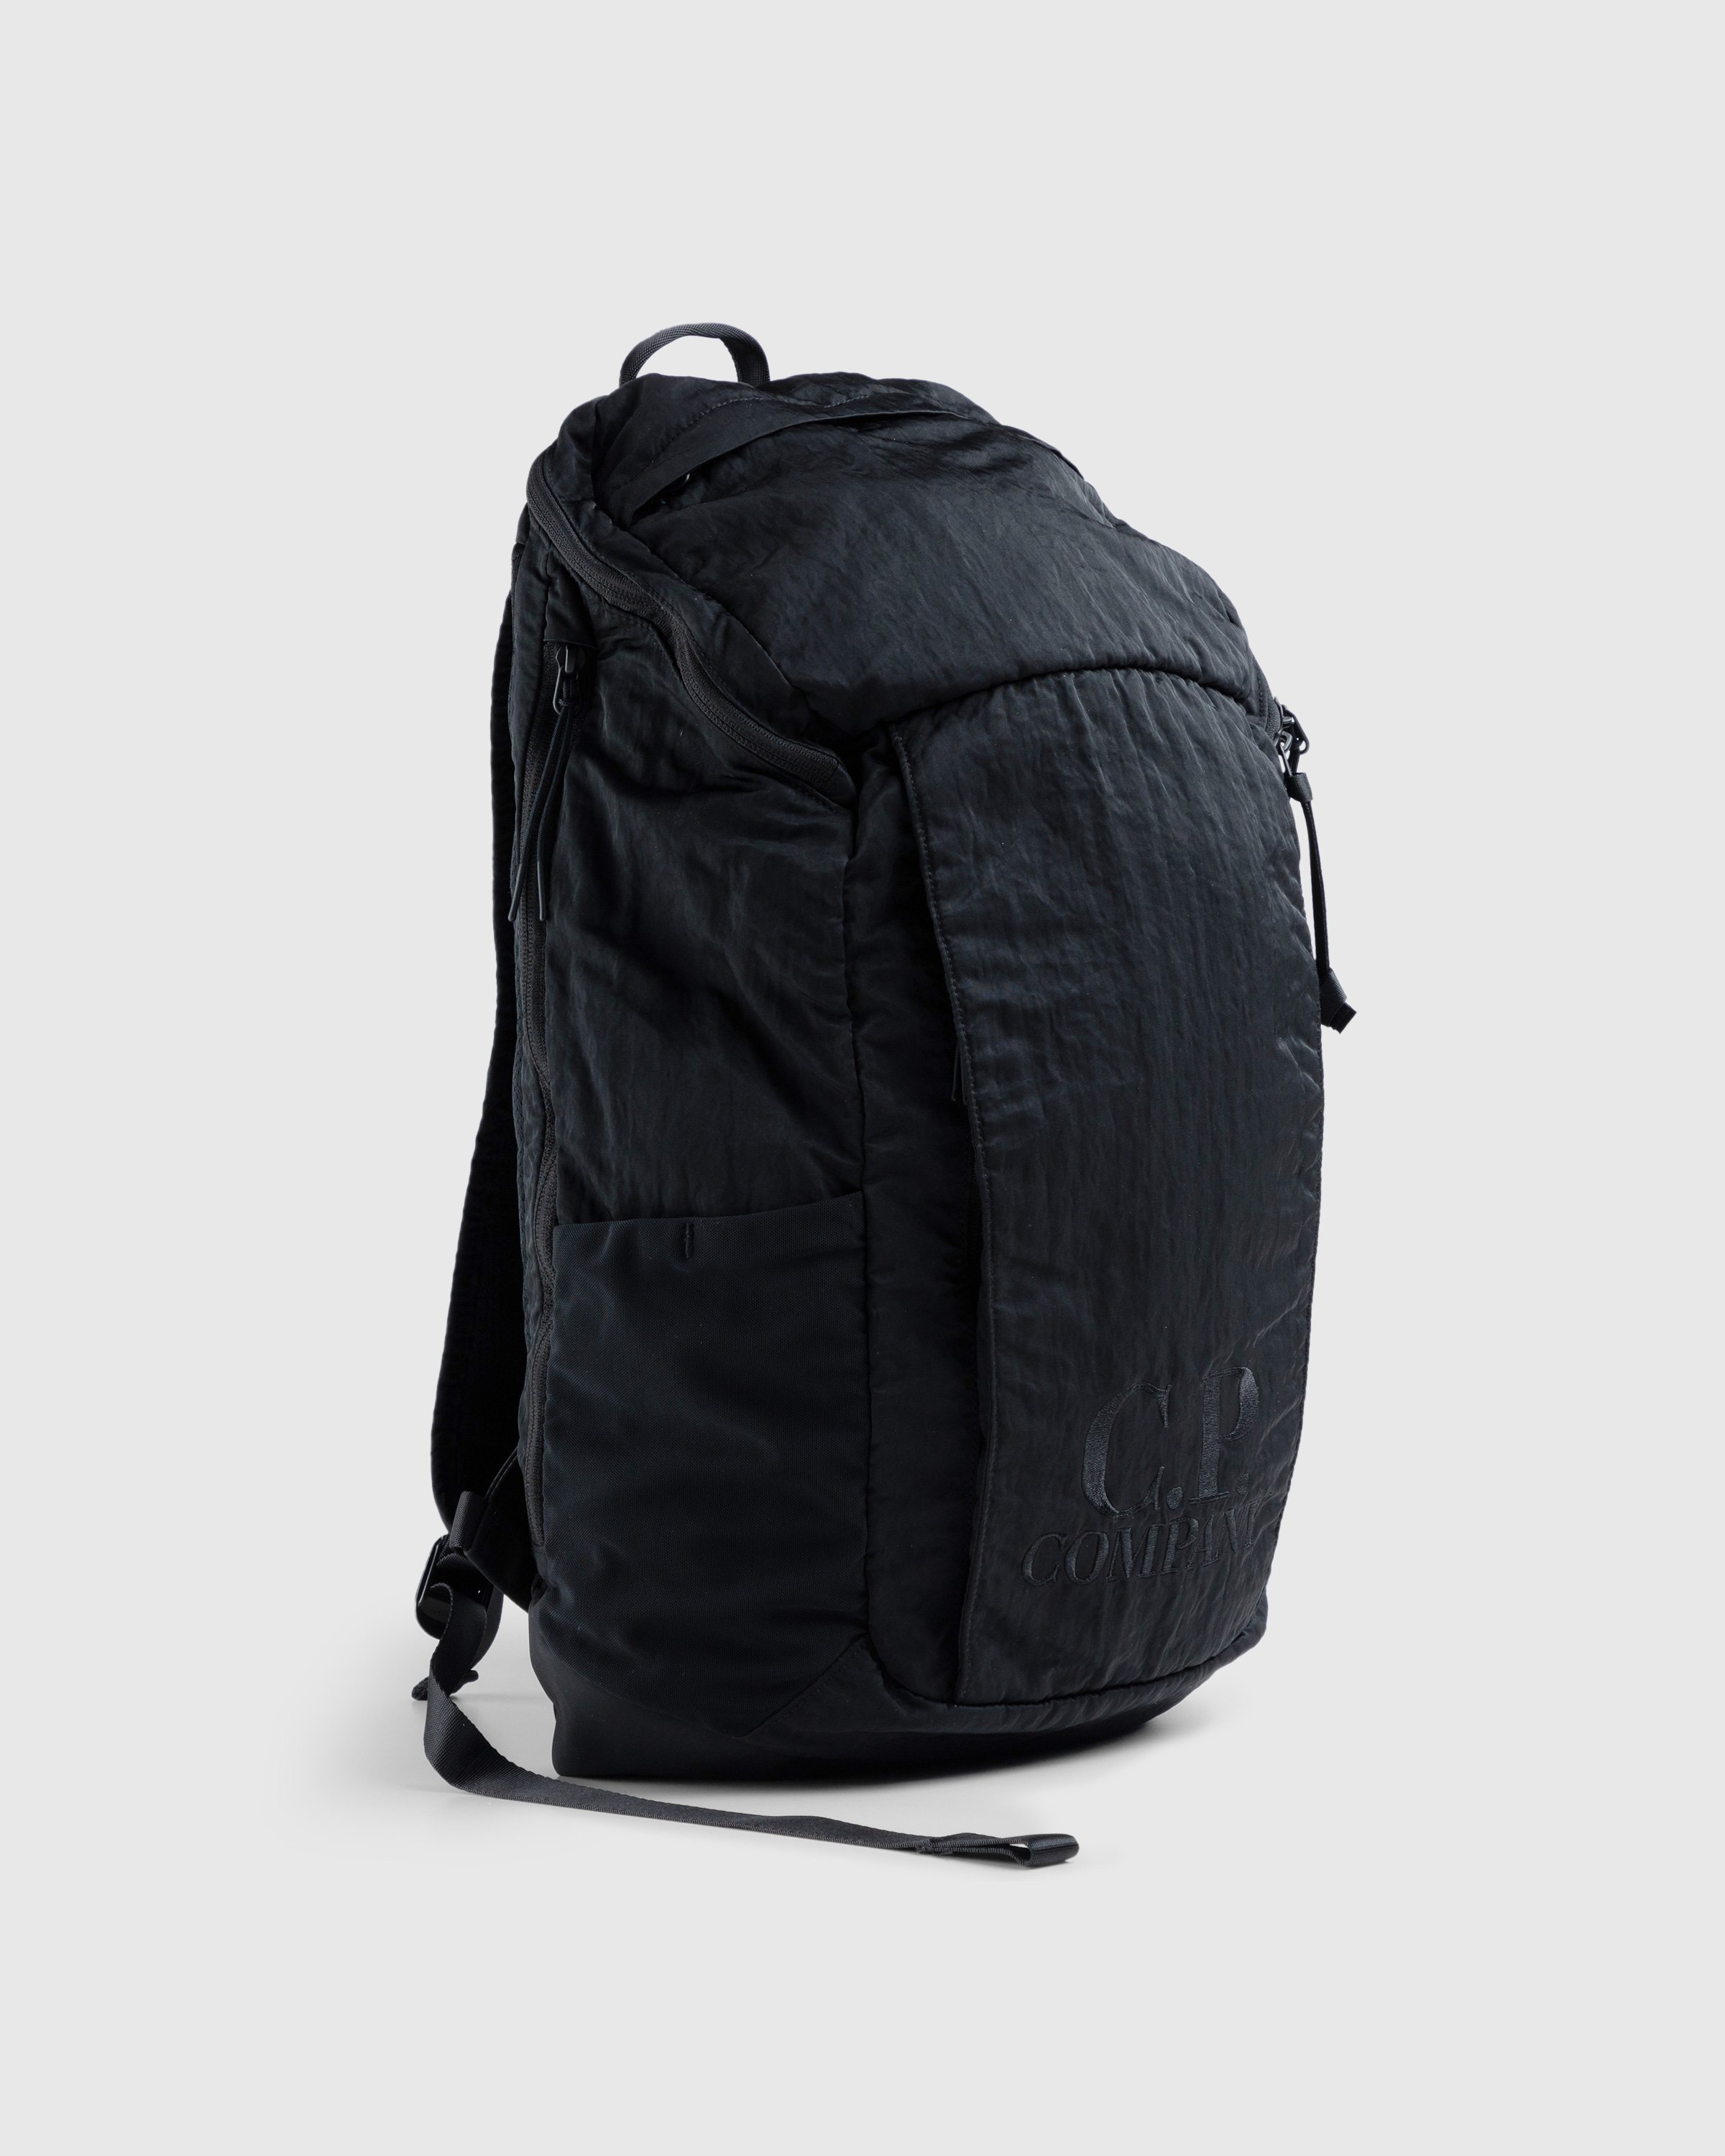 C.P. Company - Nylon B Backpack Black - Accessories - Black - Image 3